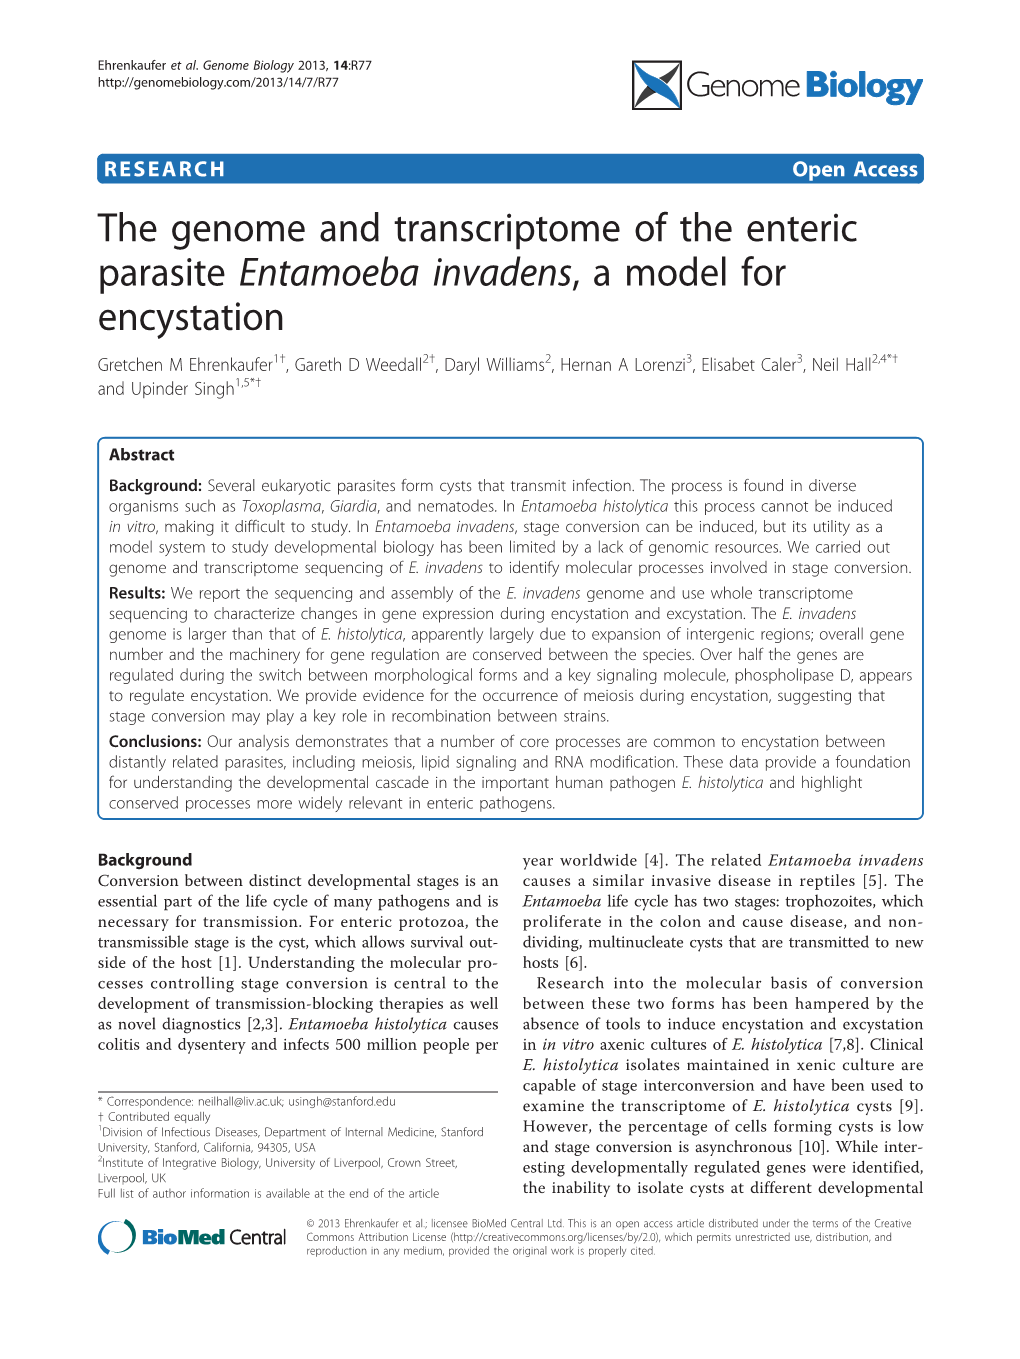 The Genome and Transcriptome of the Enteric Parasite Entamoeba